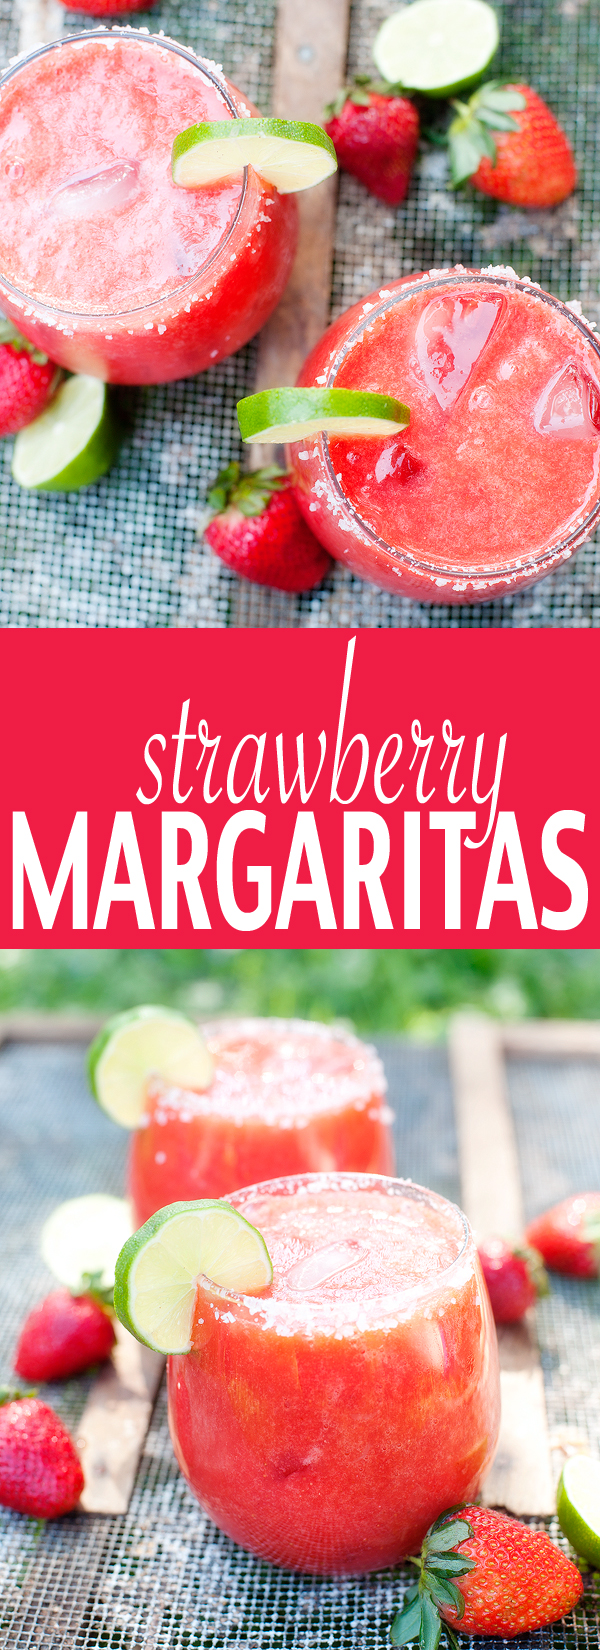 strawberry_margaritas_pin